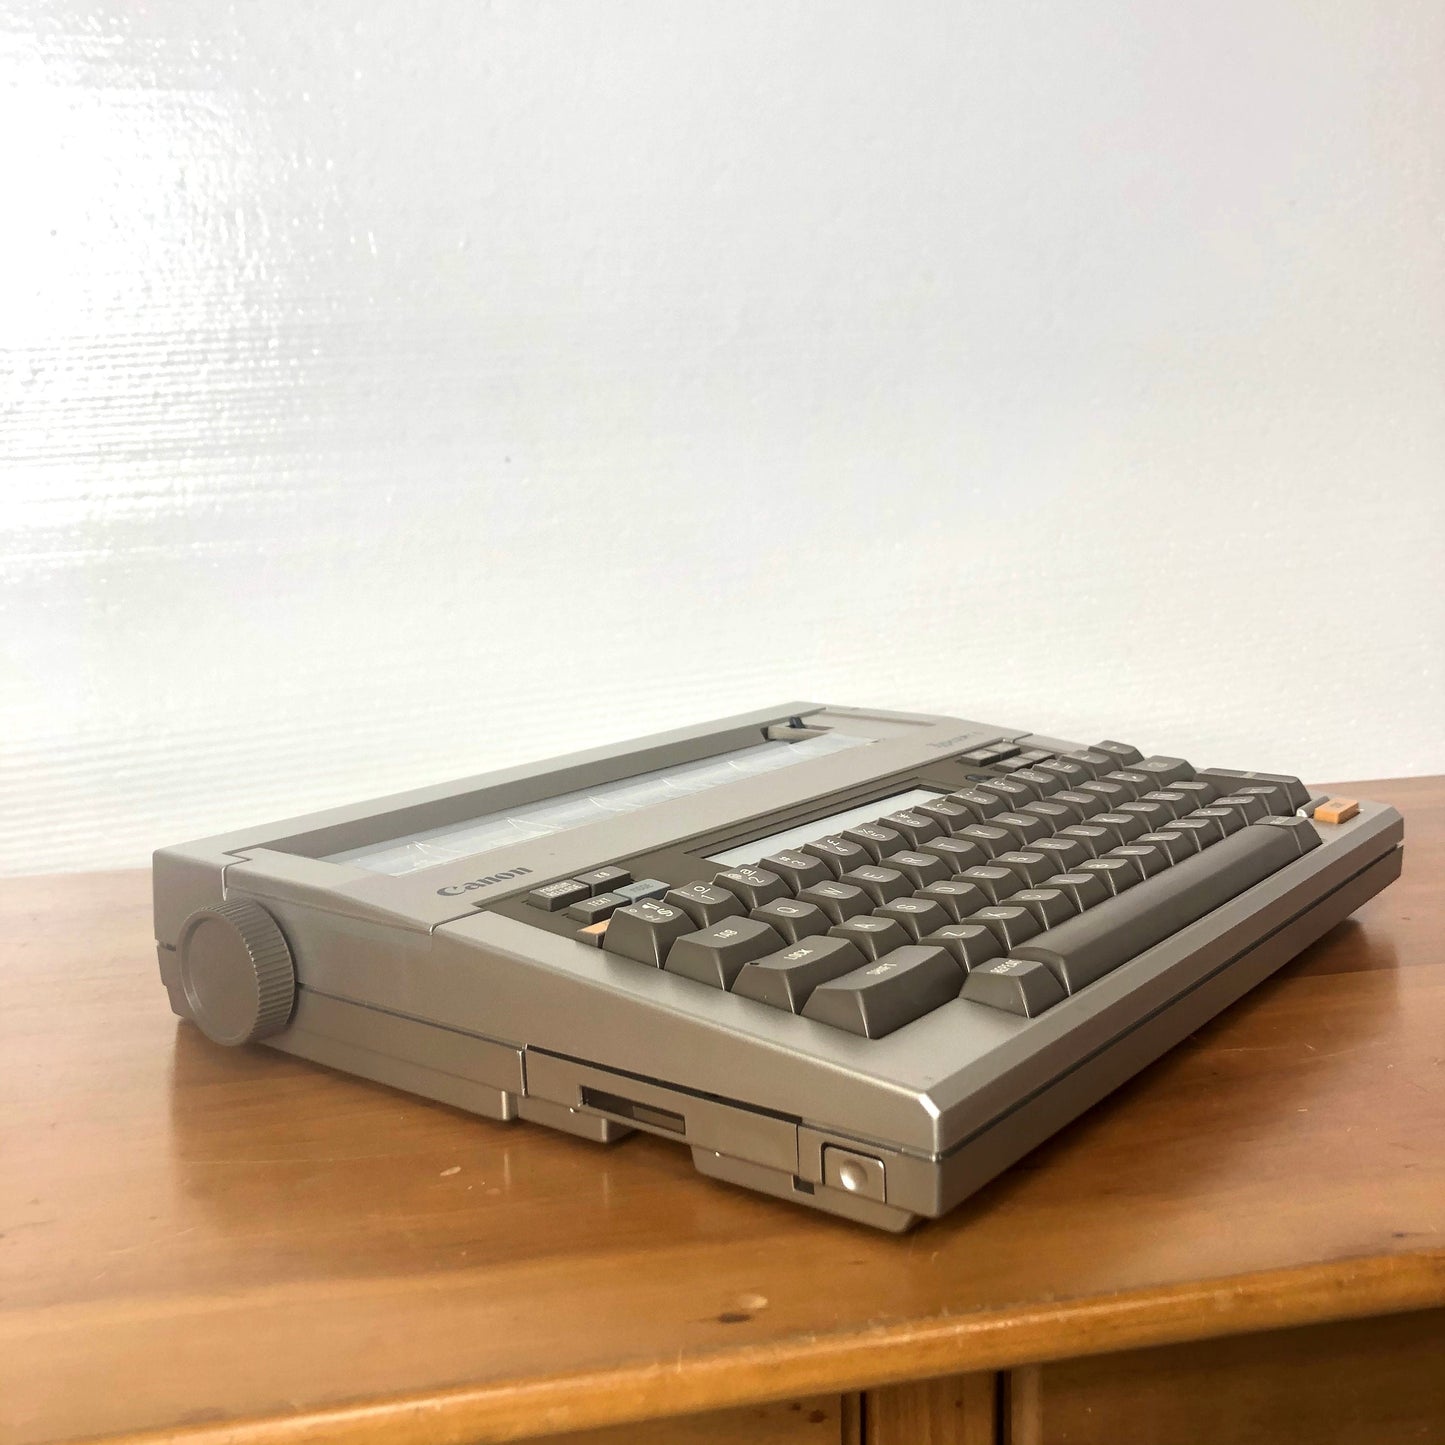 Canon Typestar 6 | 1985 Portable Typewriter/Word Processor